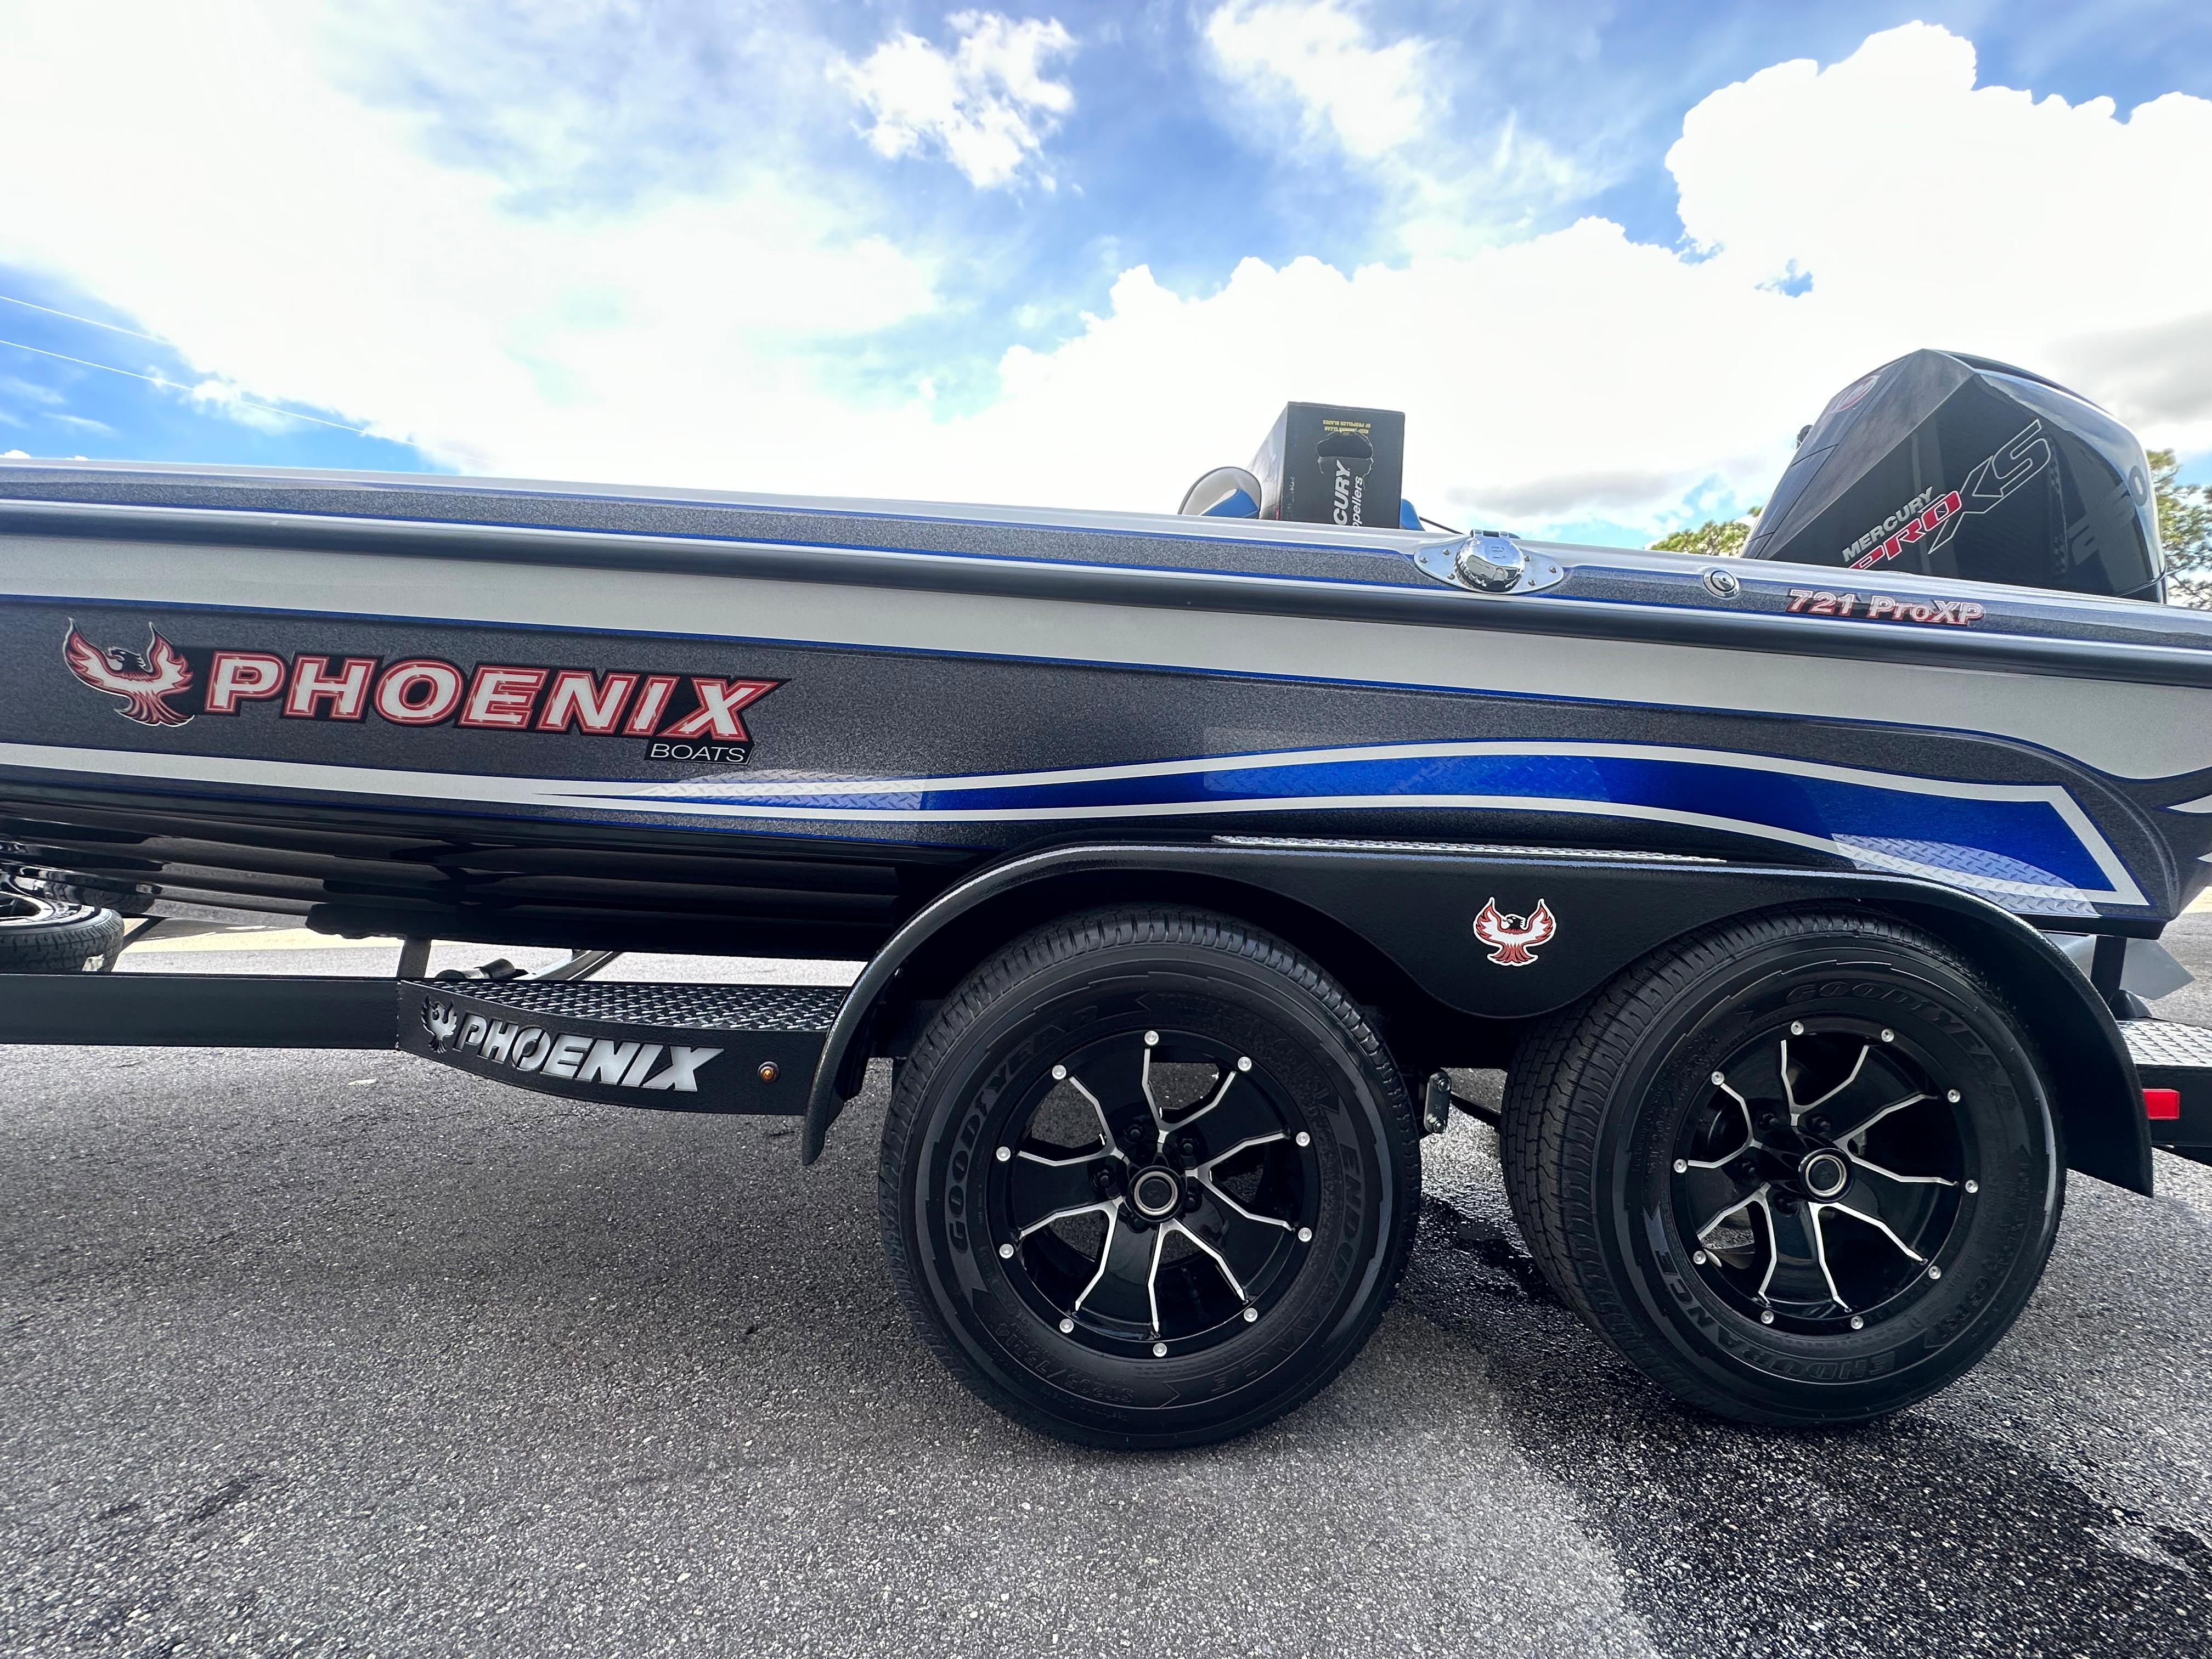 New 2024 Phoenix 721 Pro Xp, 34772 Saint Cloud Boat Trader